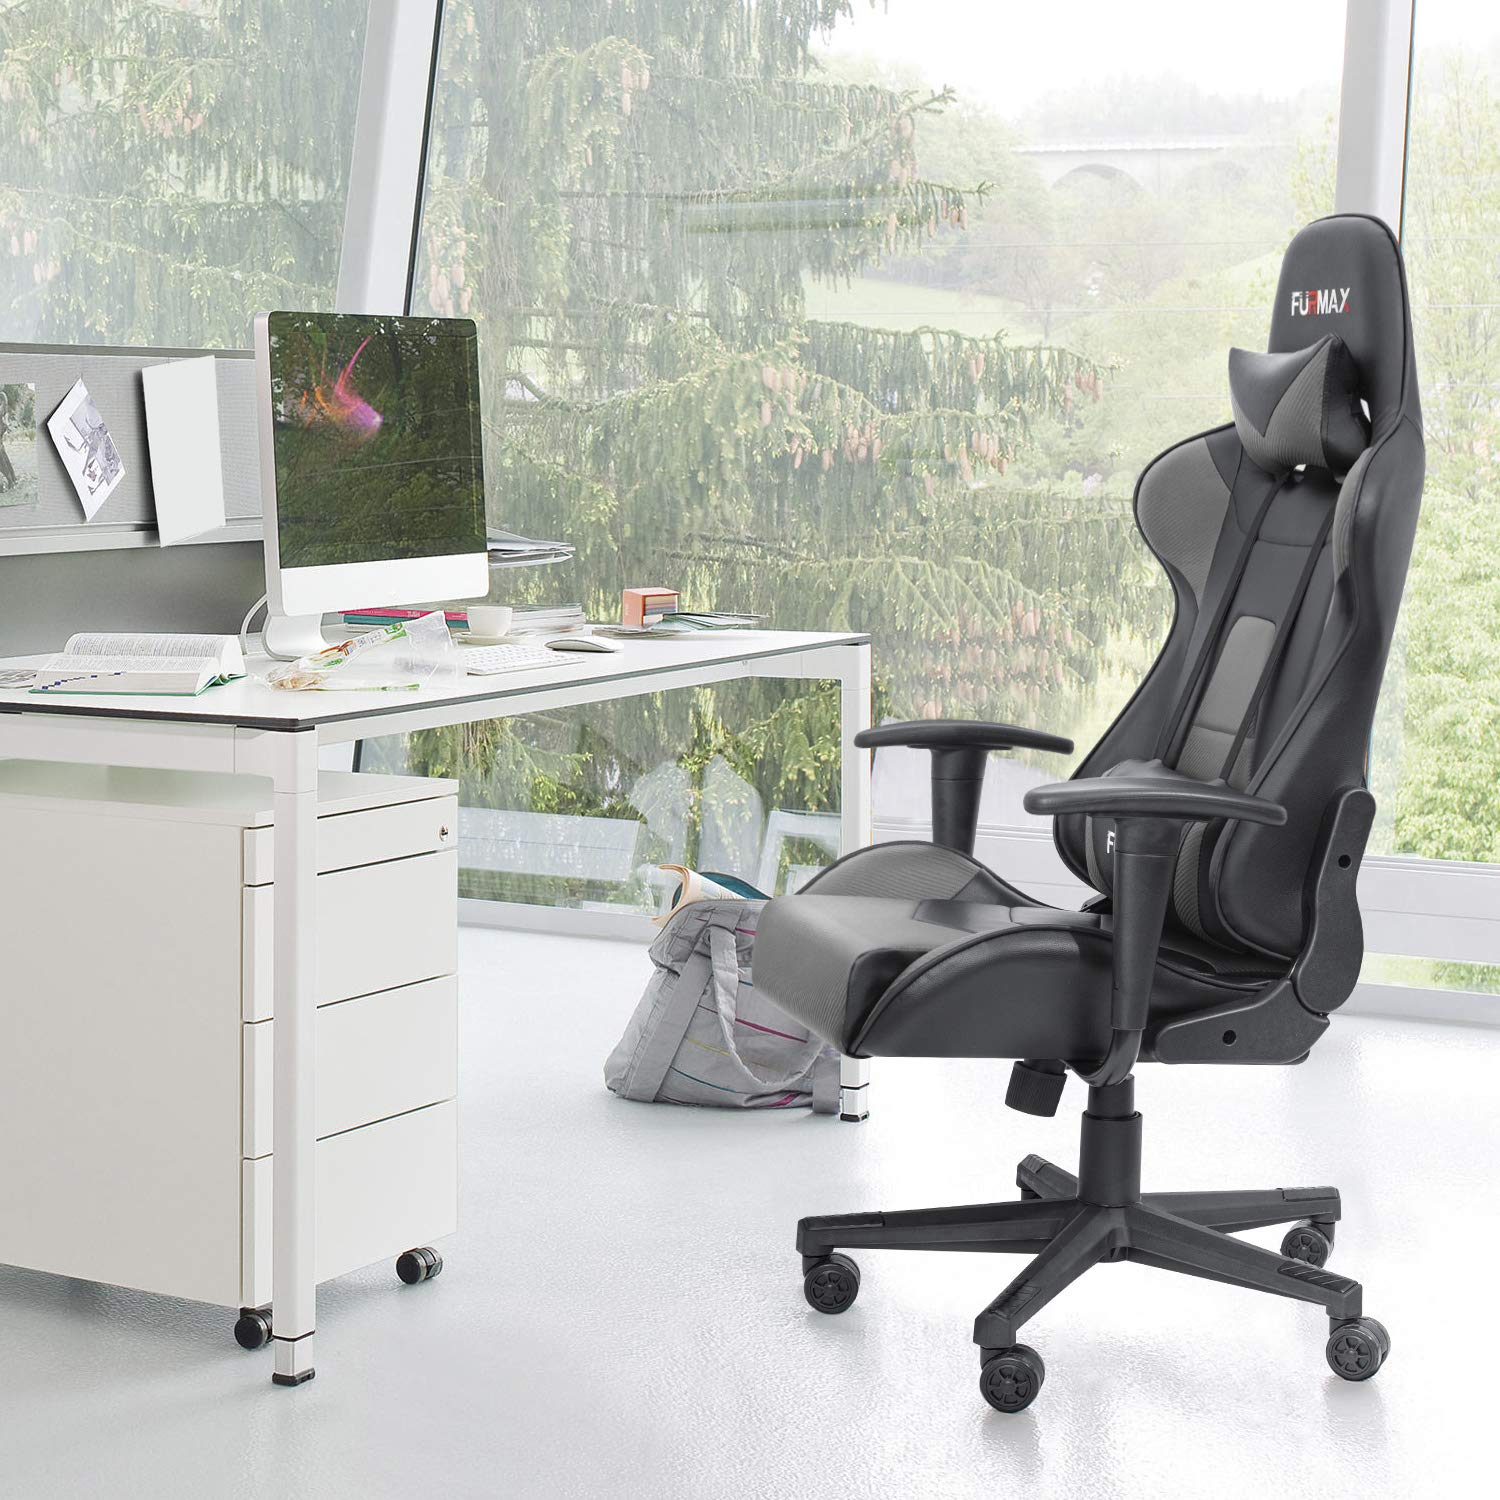 Furmax Gaming Office Chair Ergonomic Racing Style